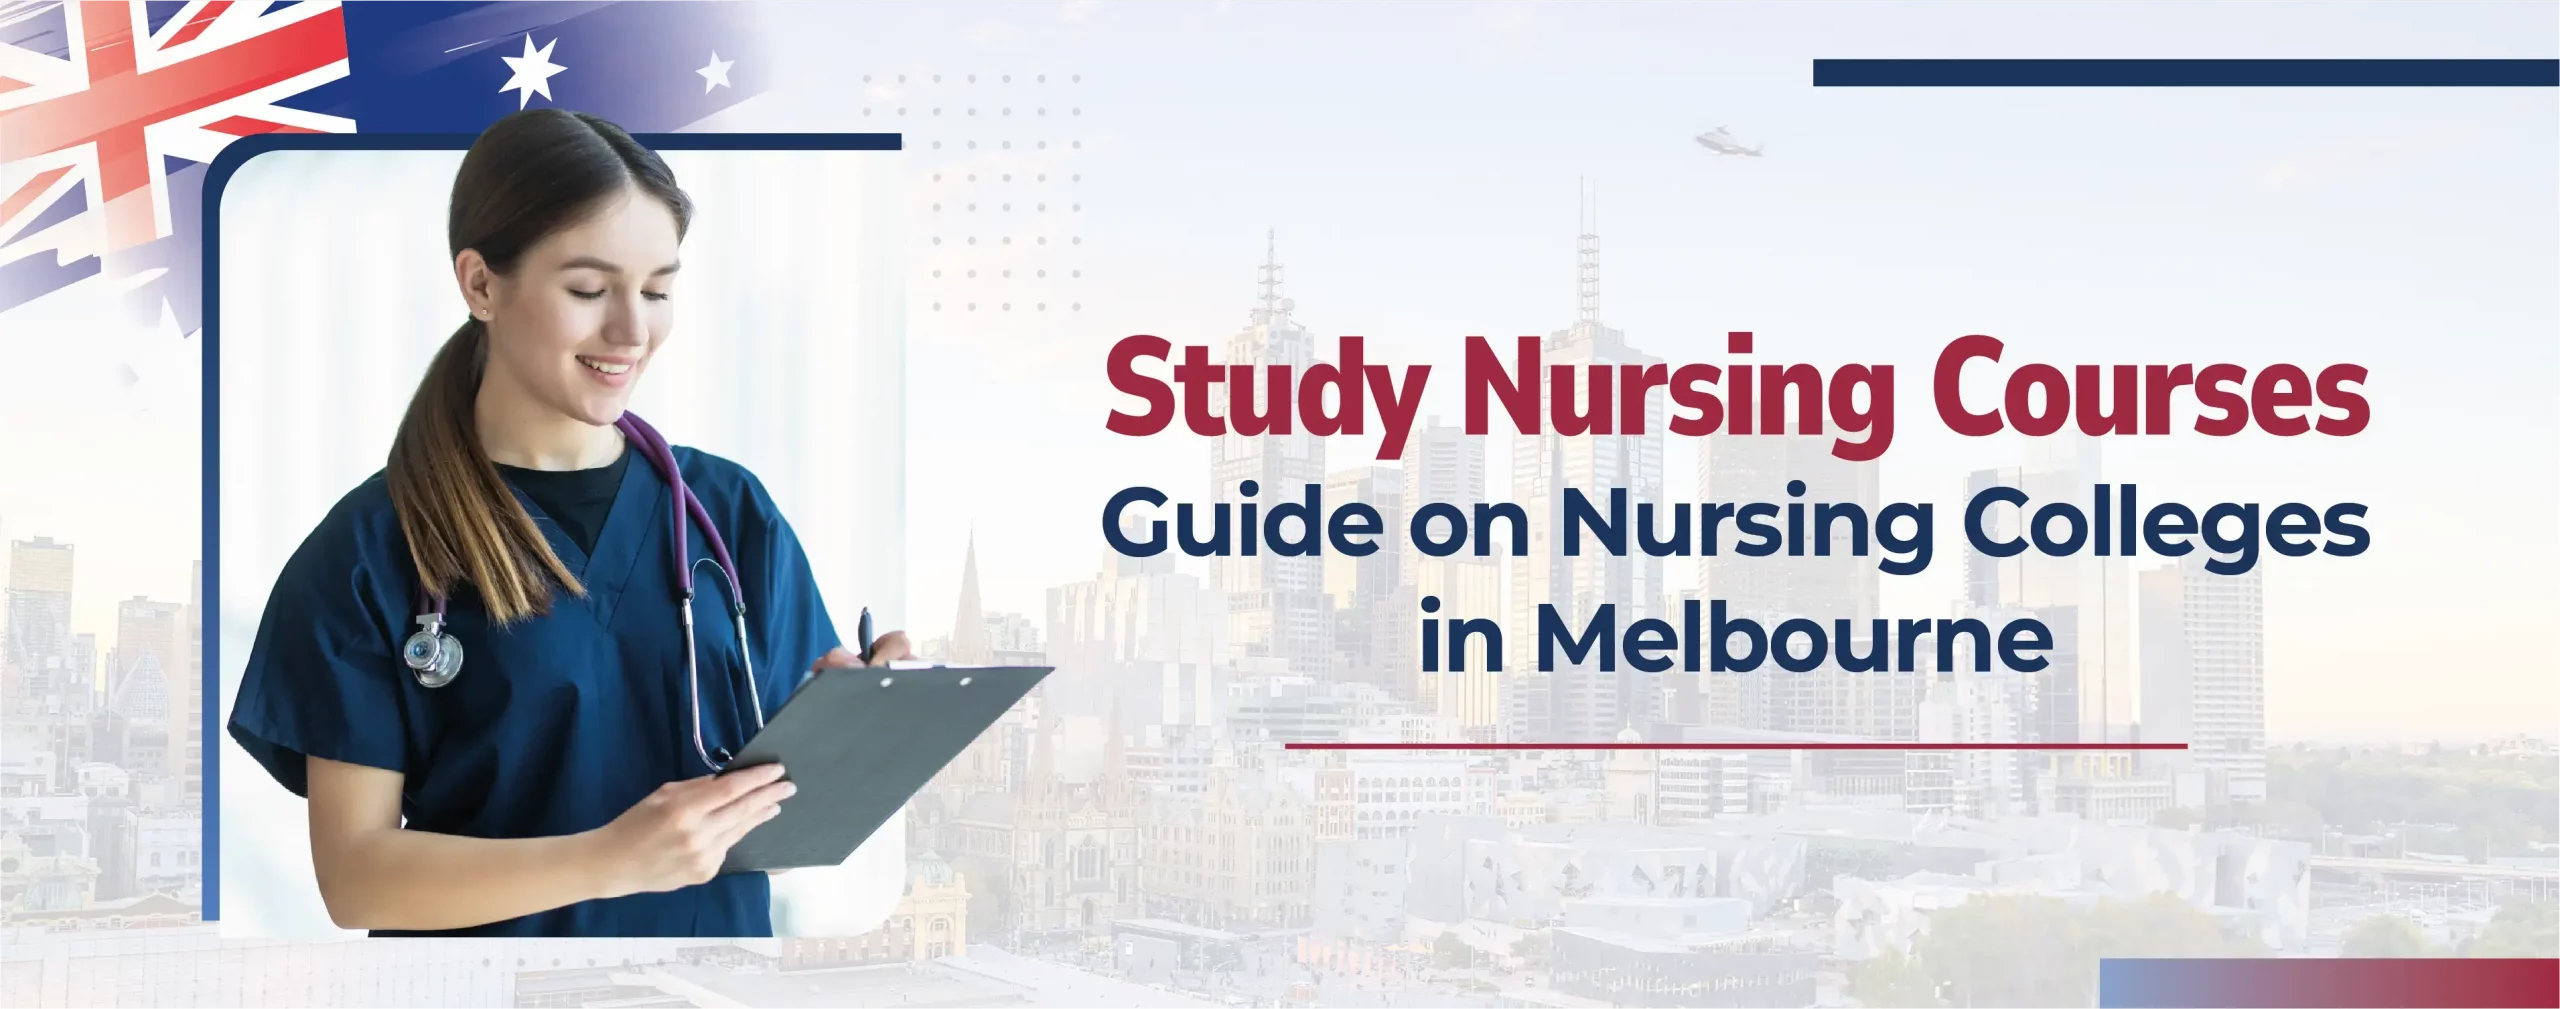 Study Nursing Courses: Guide on Nursing Colleges in Melbourne